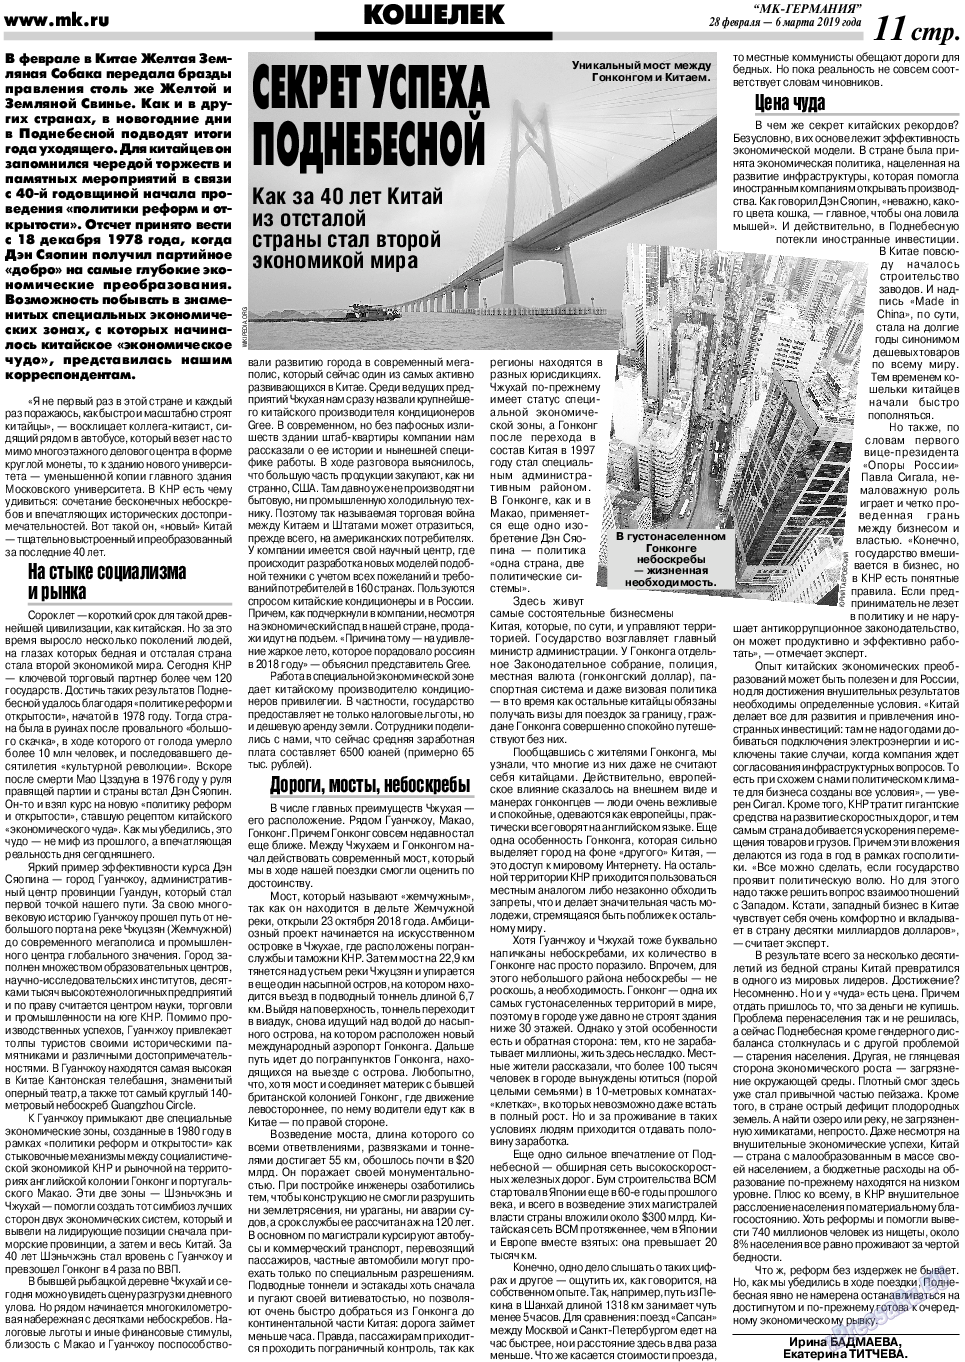 МК-Германия, газета. 2019 №10 стр.11